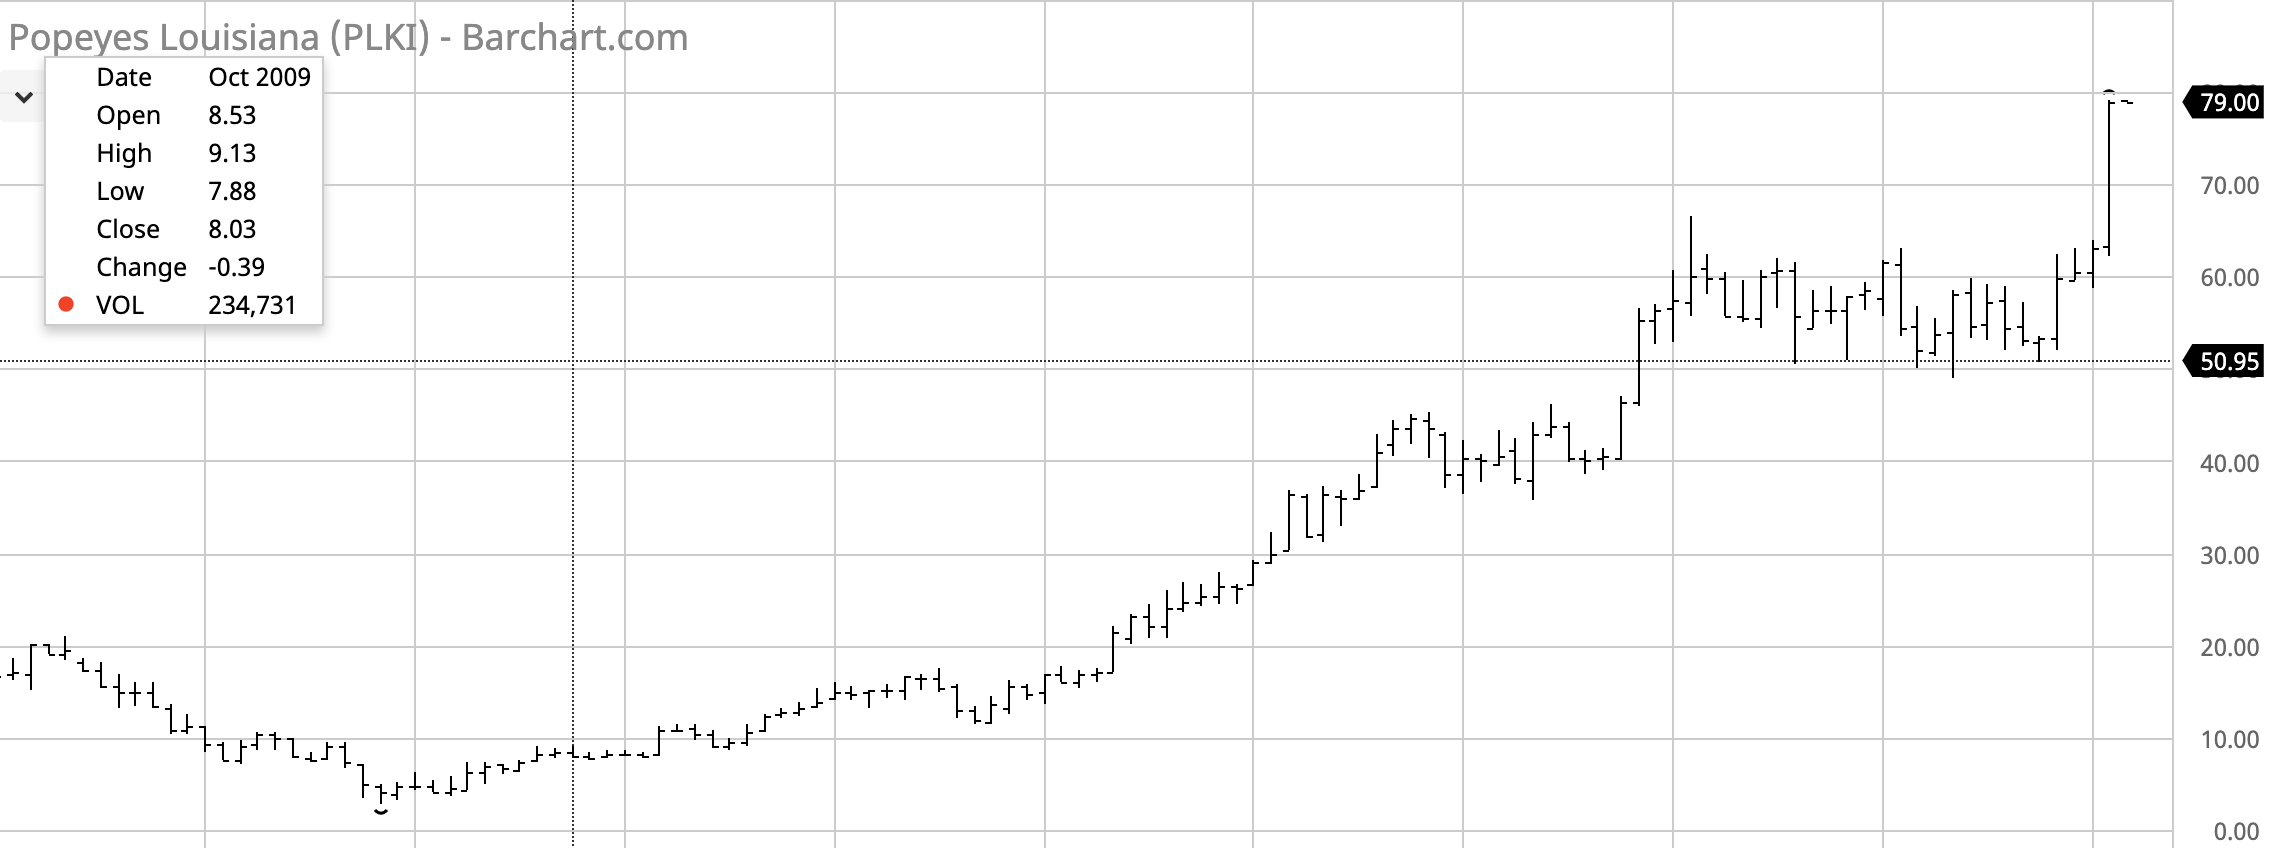 Plki Stock Price Chart